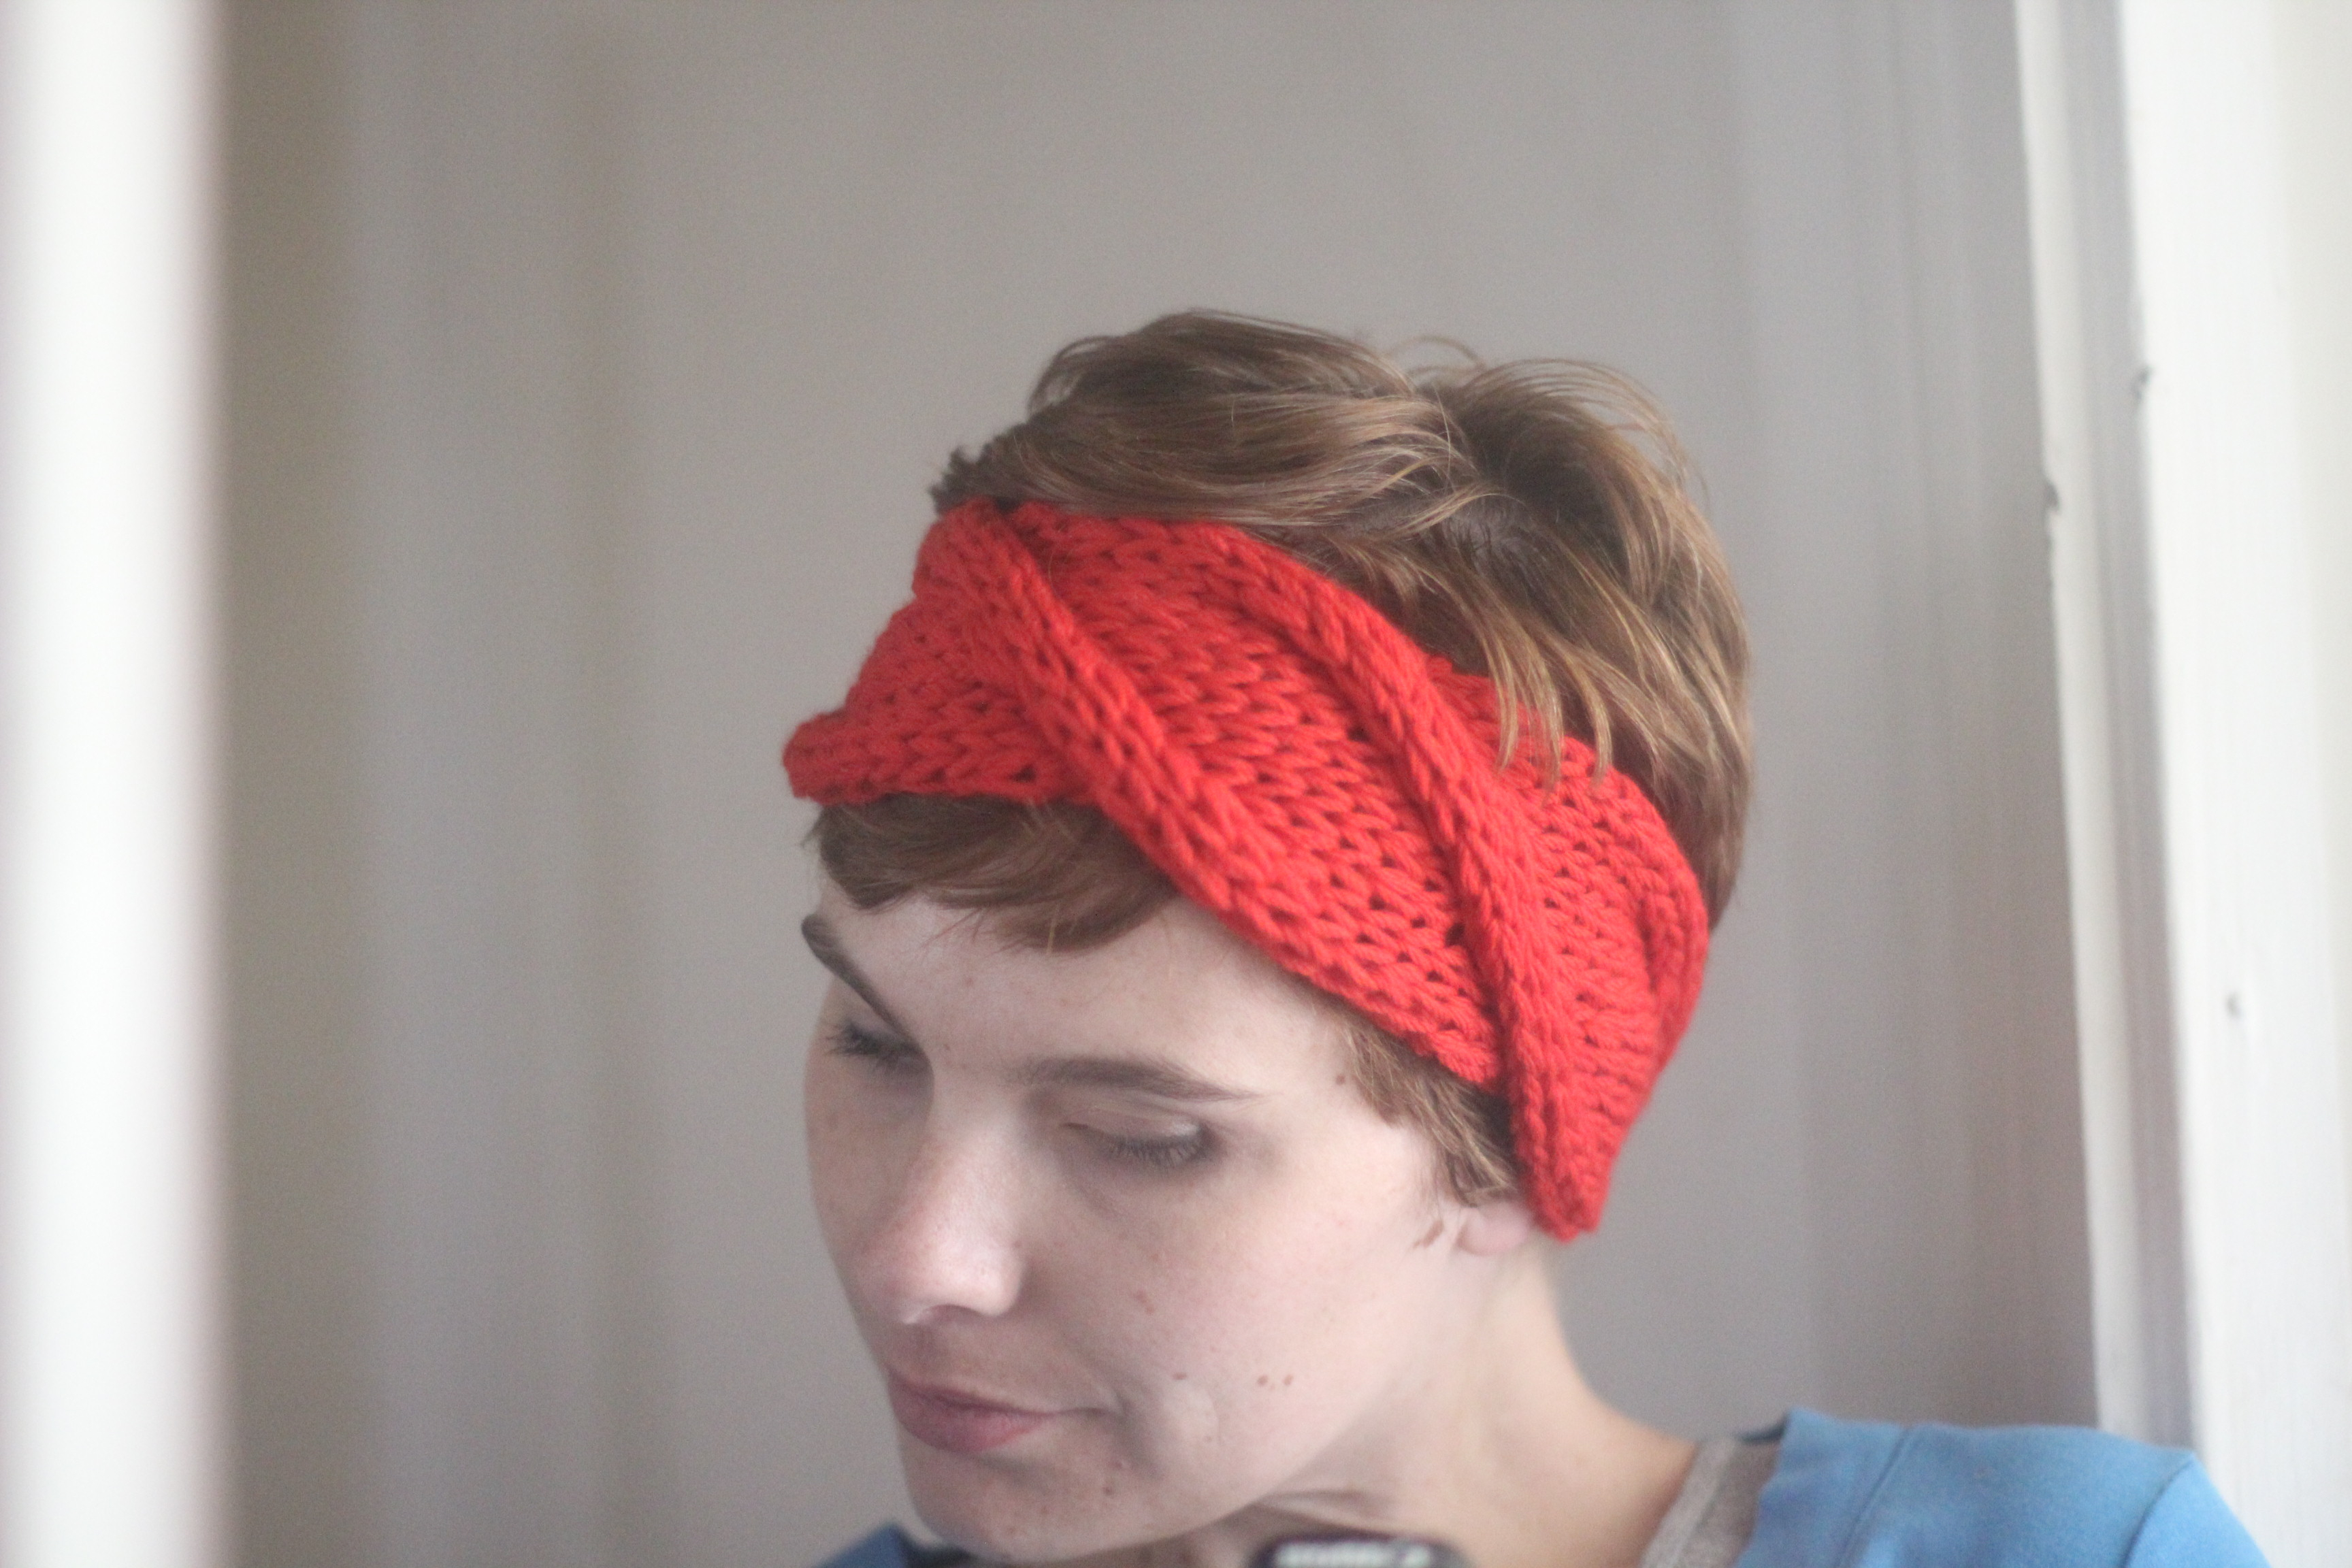 Knit Headband With Flower Pattern Ba Headbands Ba Headband Knit Pattern Free